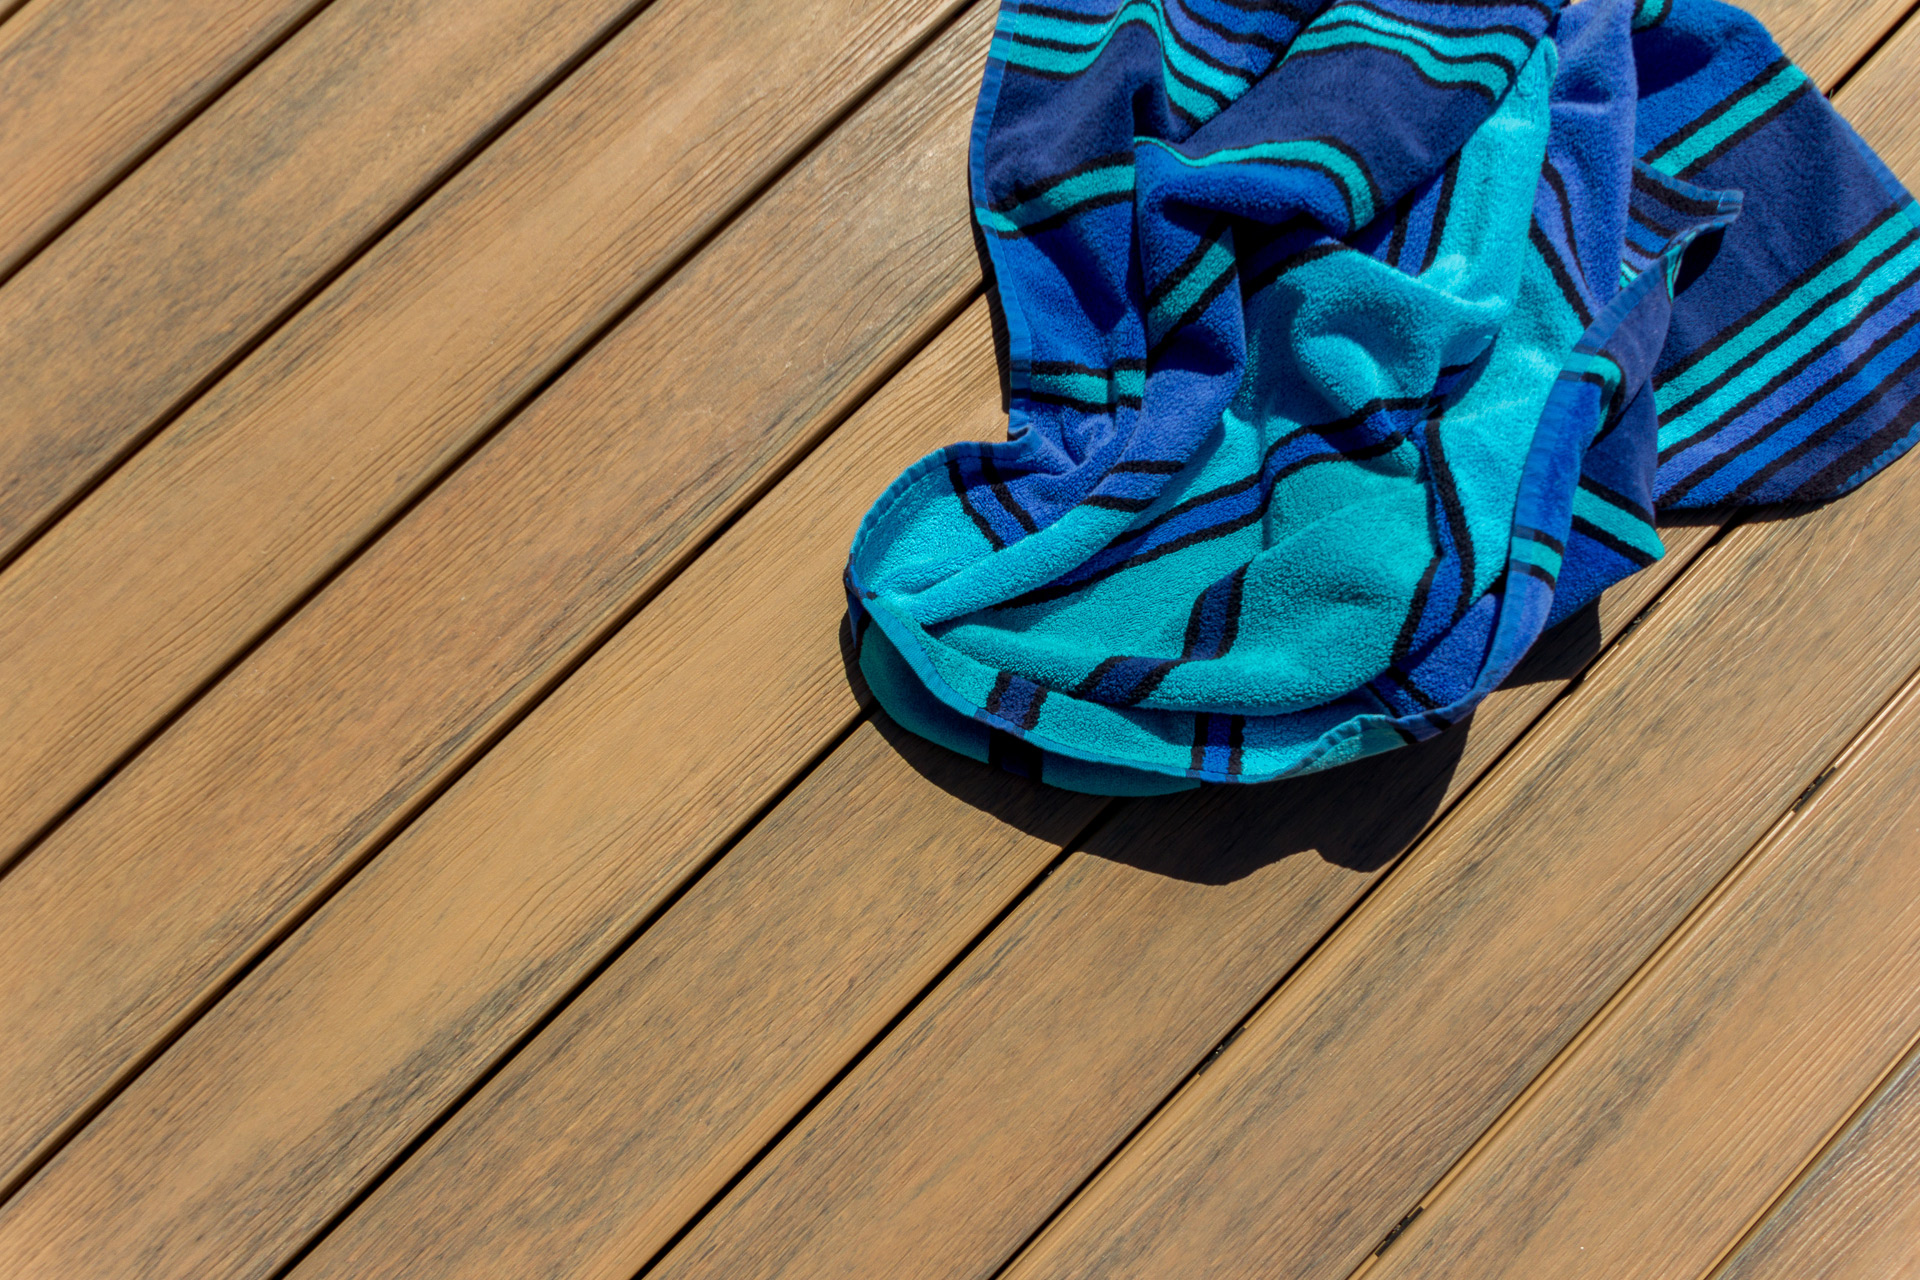 Striped blue towel on a light-colored composite deck.